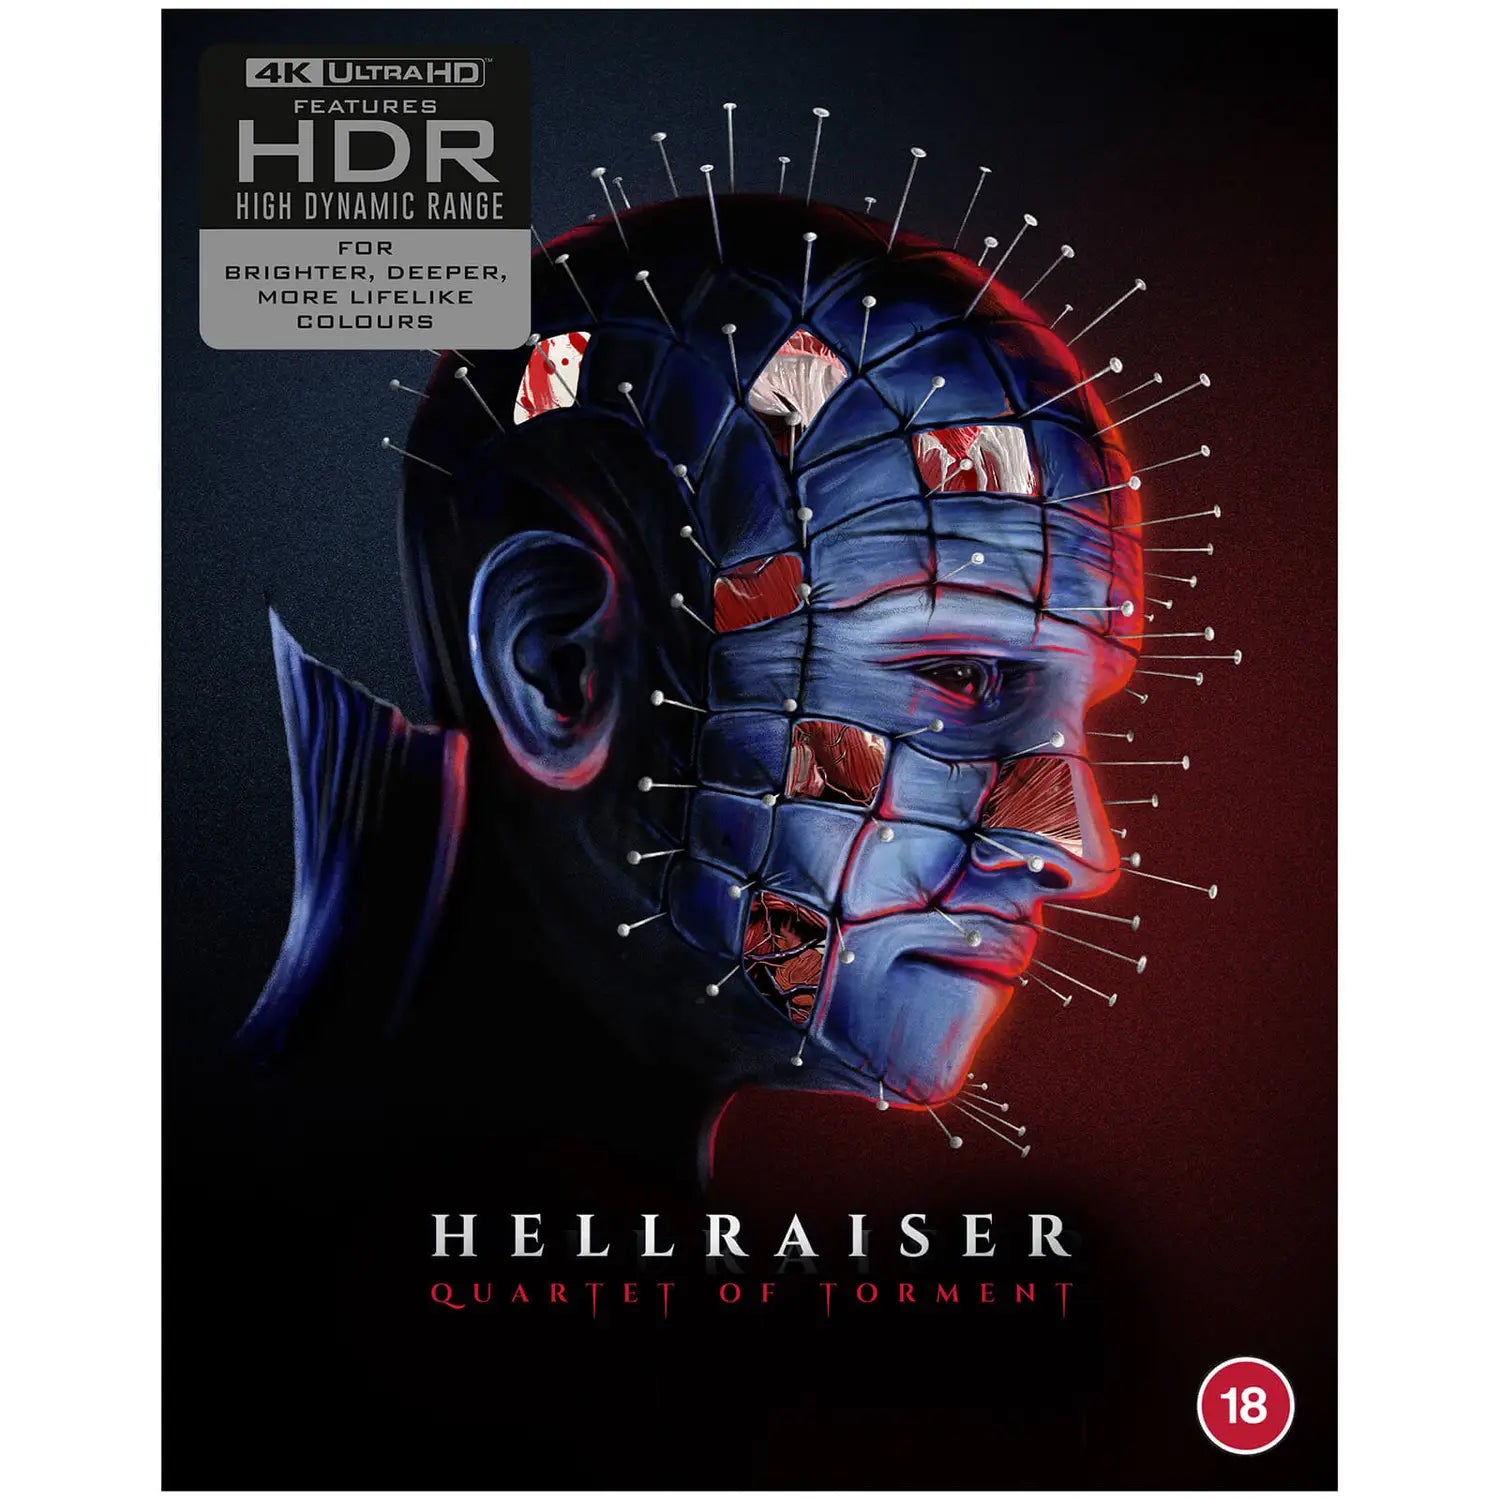 Hellraiser Quartet Torment 4k front cover.